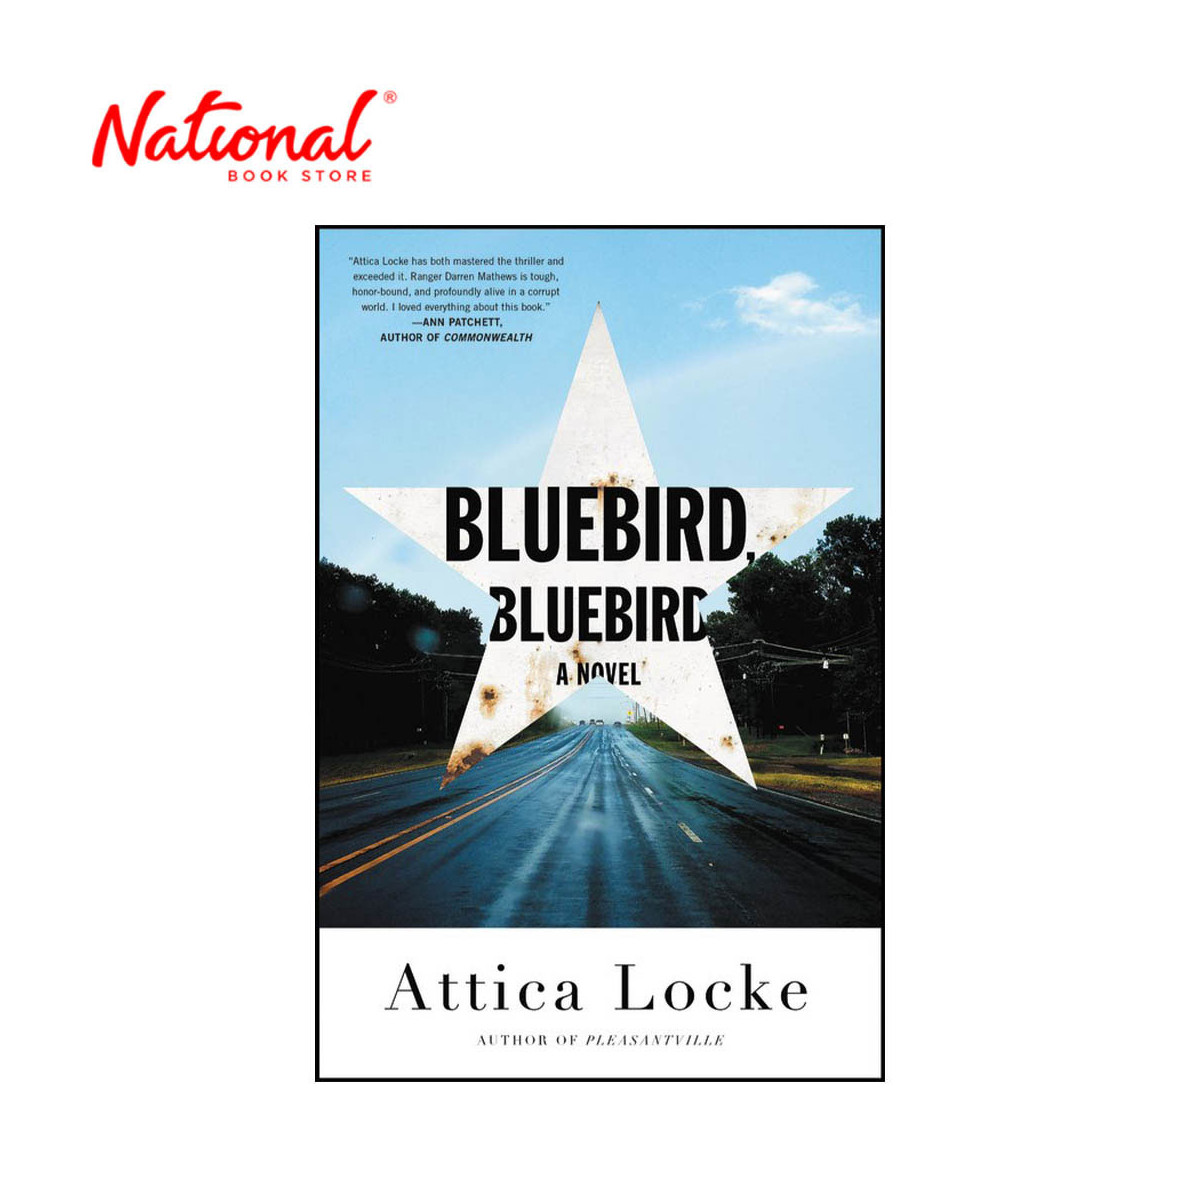 Bluebird, Bluebird: A Novel by Attica Locke - Hardcover - Thriller, Mystery & Suspense